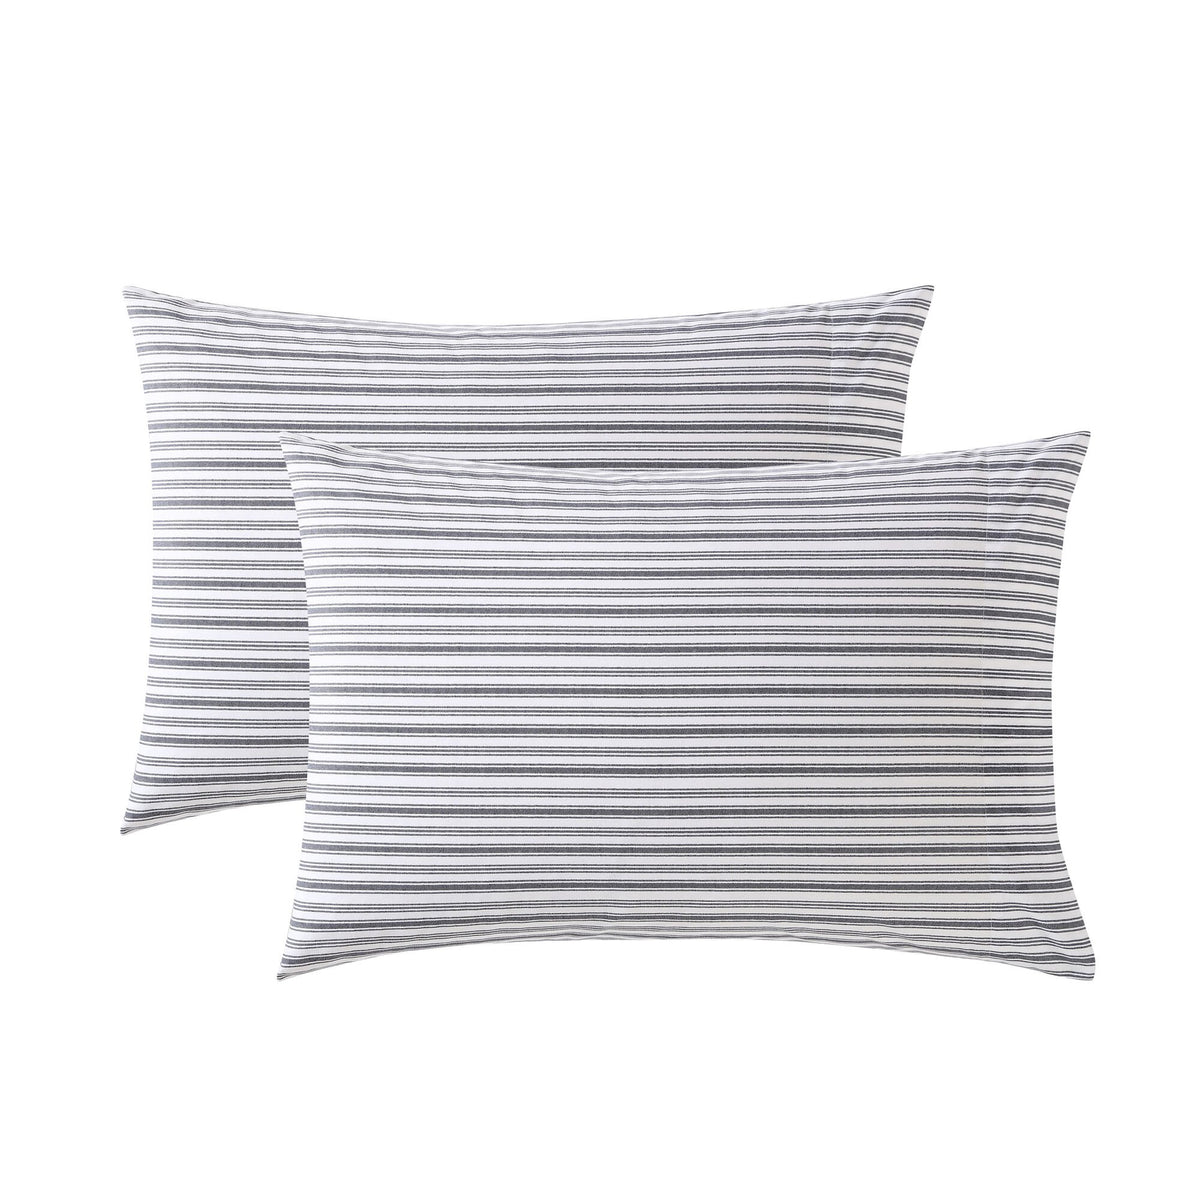 Nautica Coleridge Striped Charcoal Standard Sham Pillowcase Grey Heather